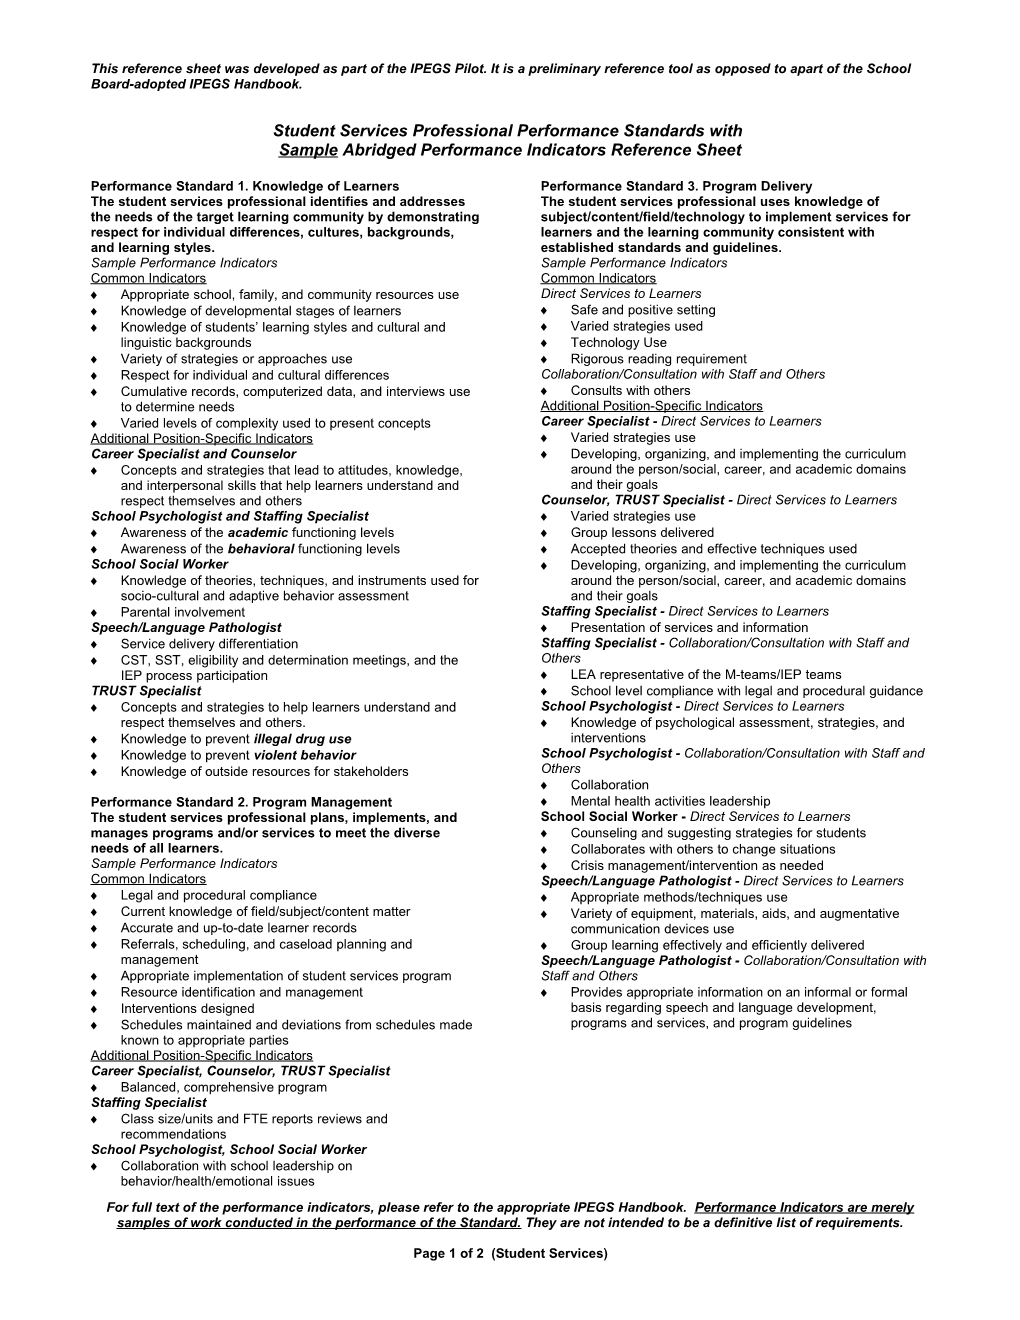 Teacher Performance Standards with Abridged Performance Indicators